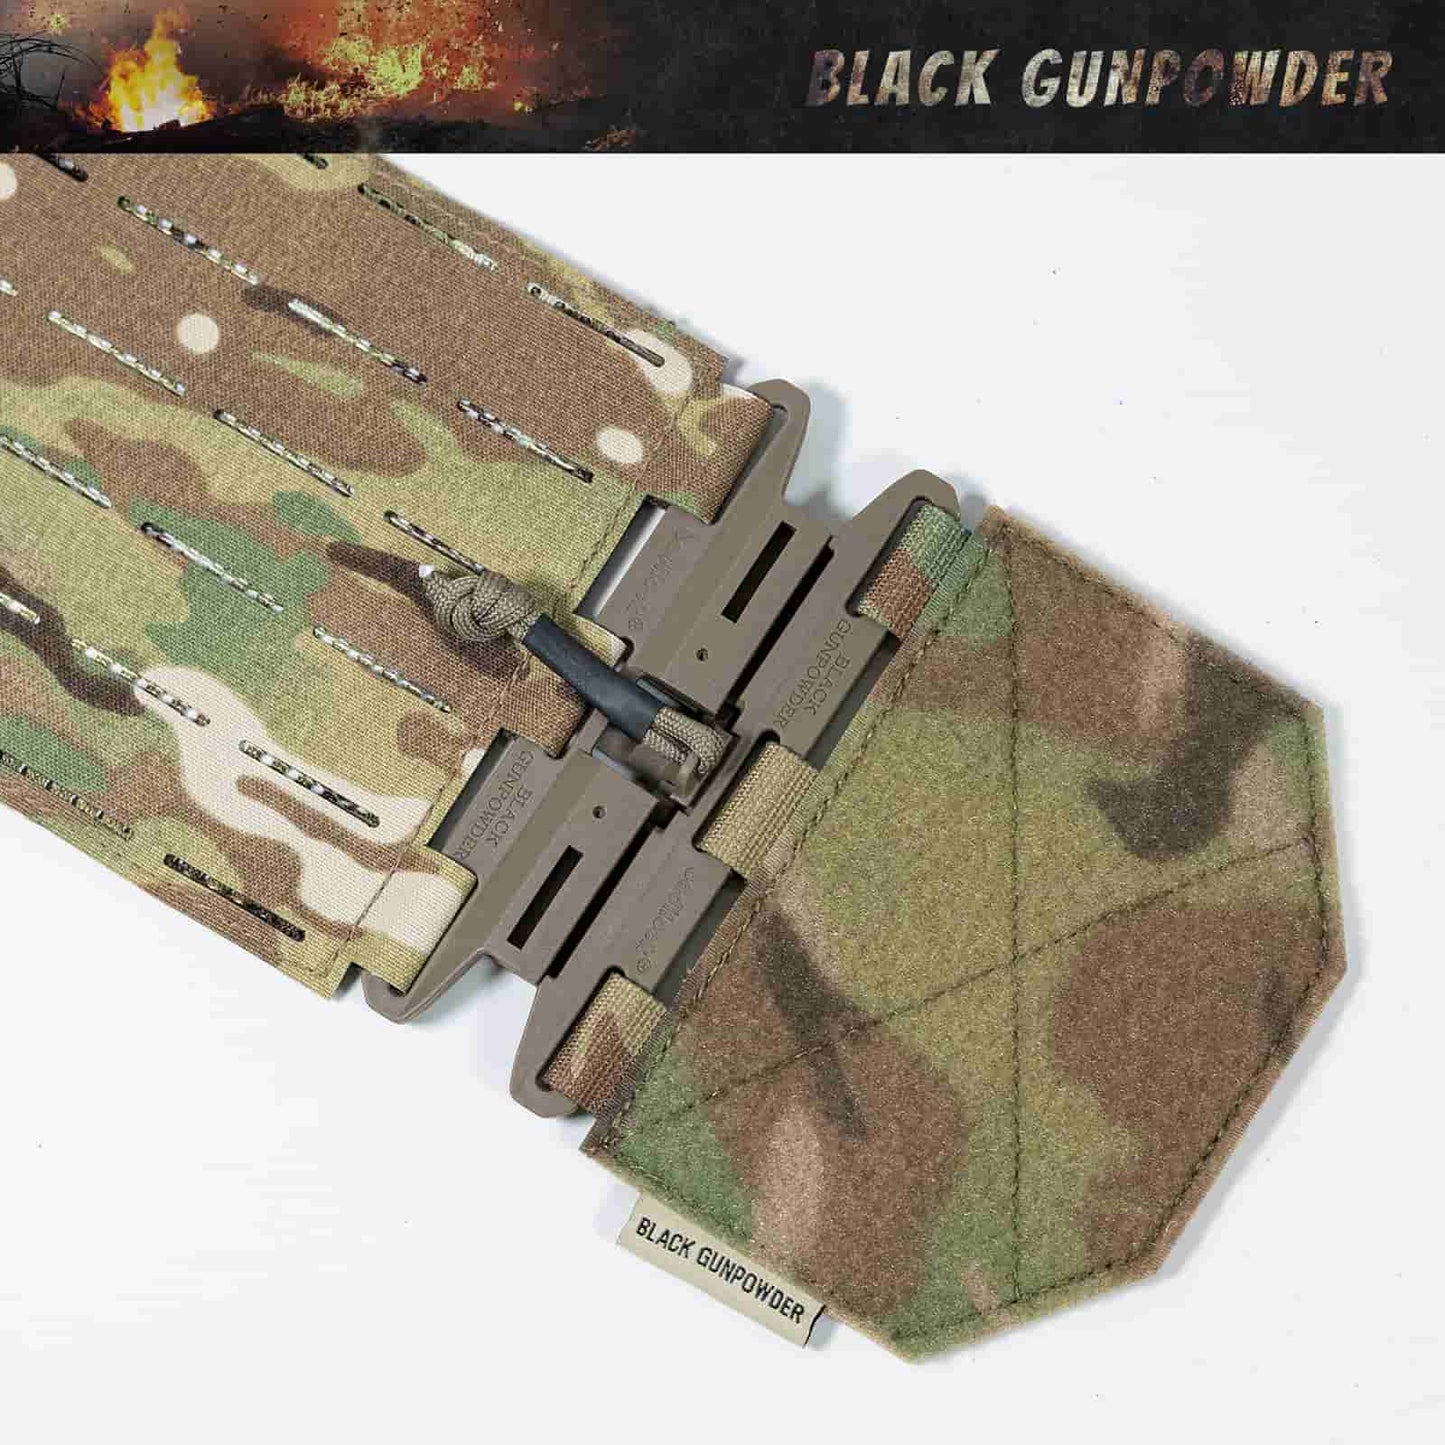 Black Gunpowder Tactical Vest Cummerbund Quick Release Magnetic Buckle One Hand Operation Model BG-TC2